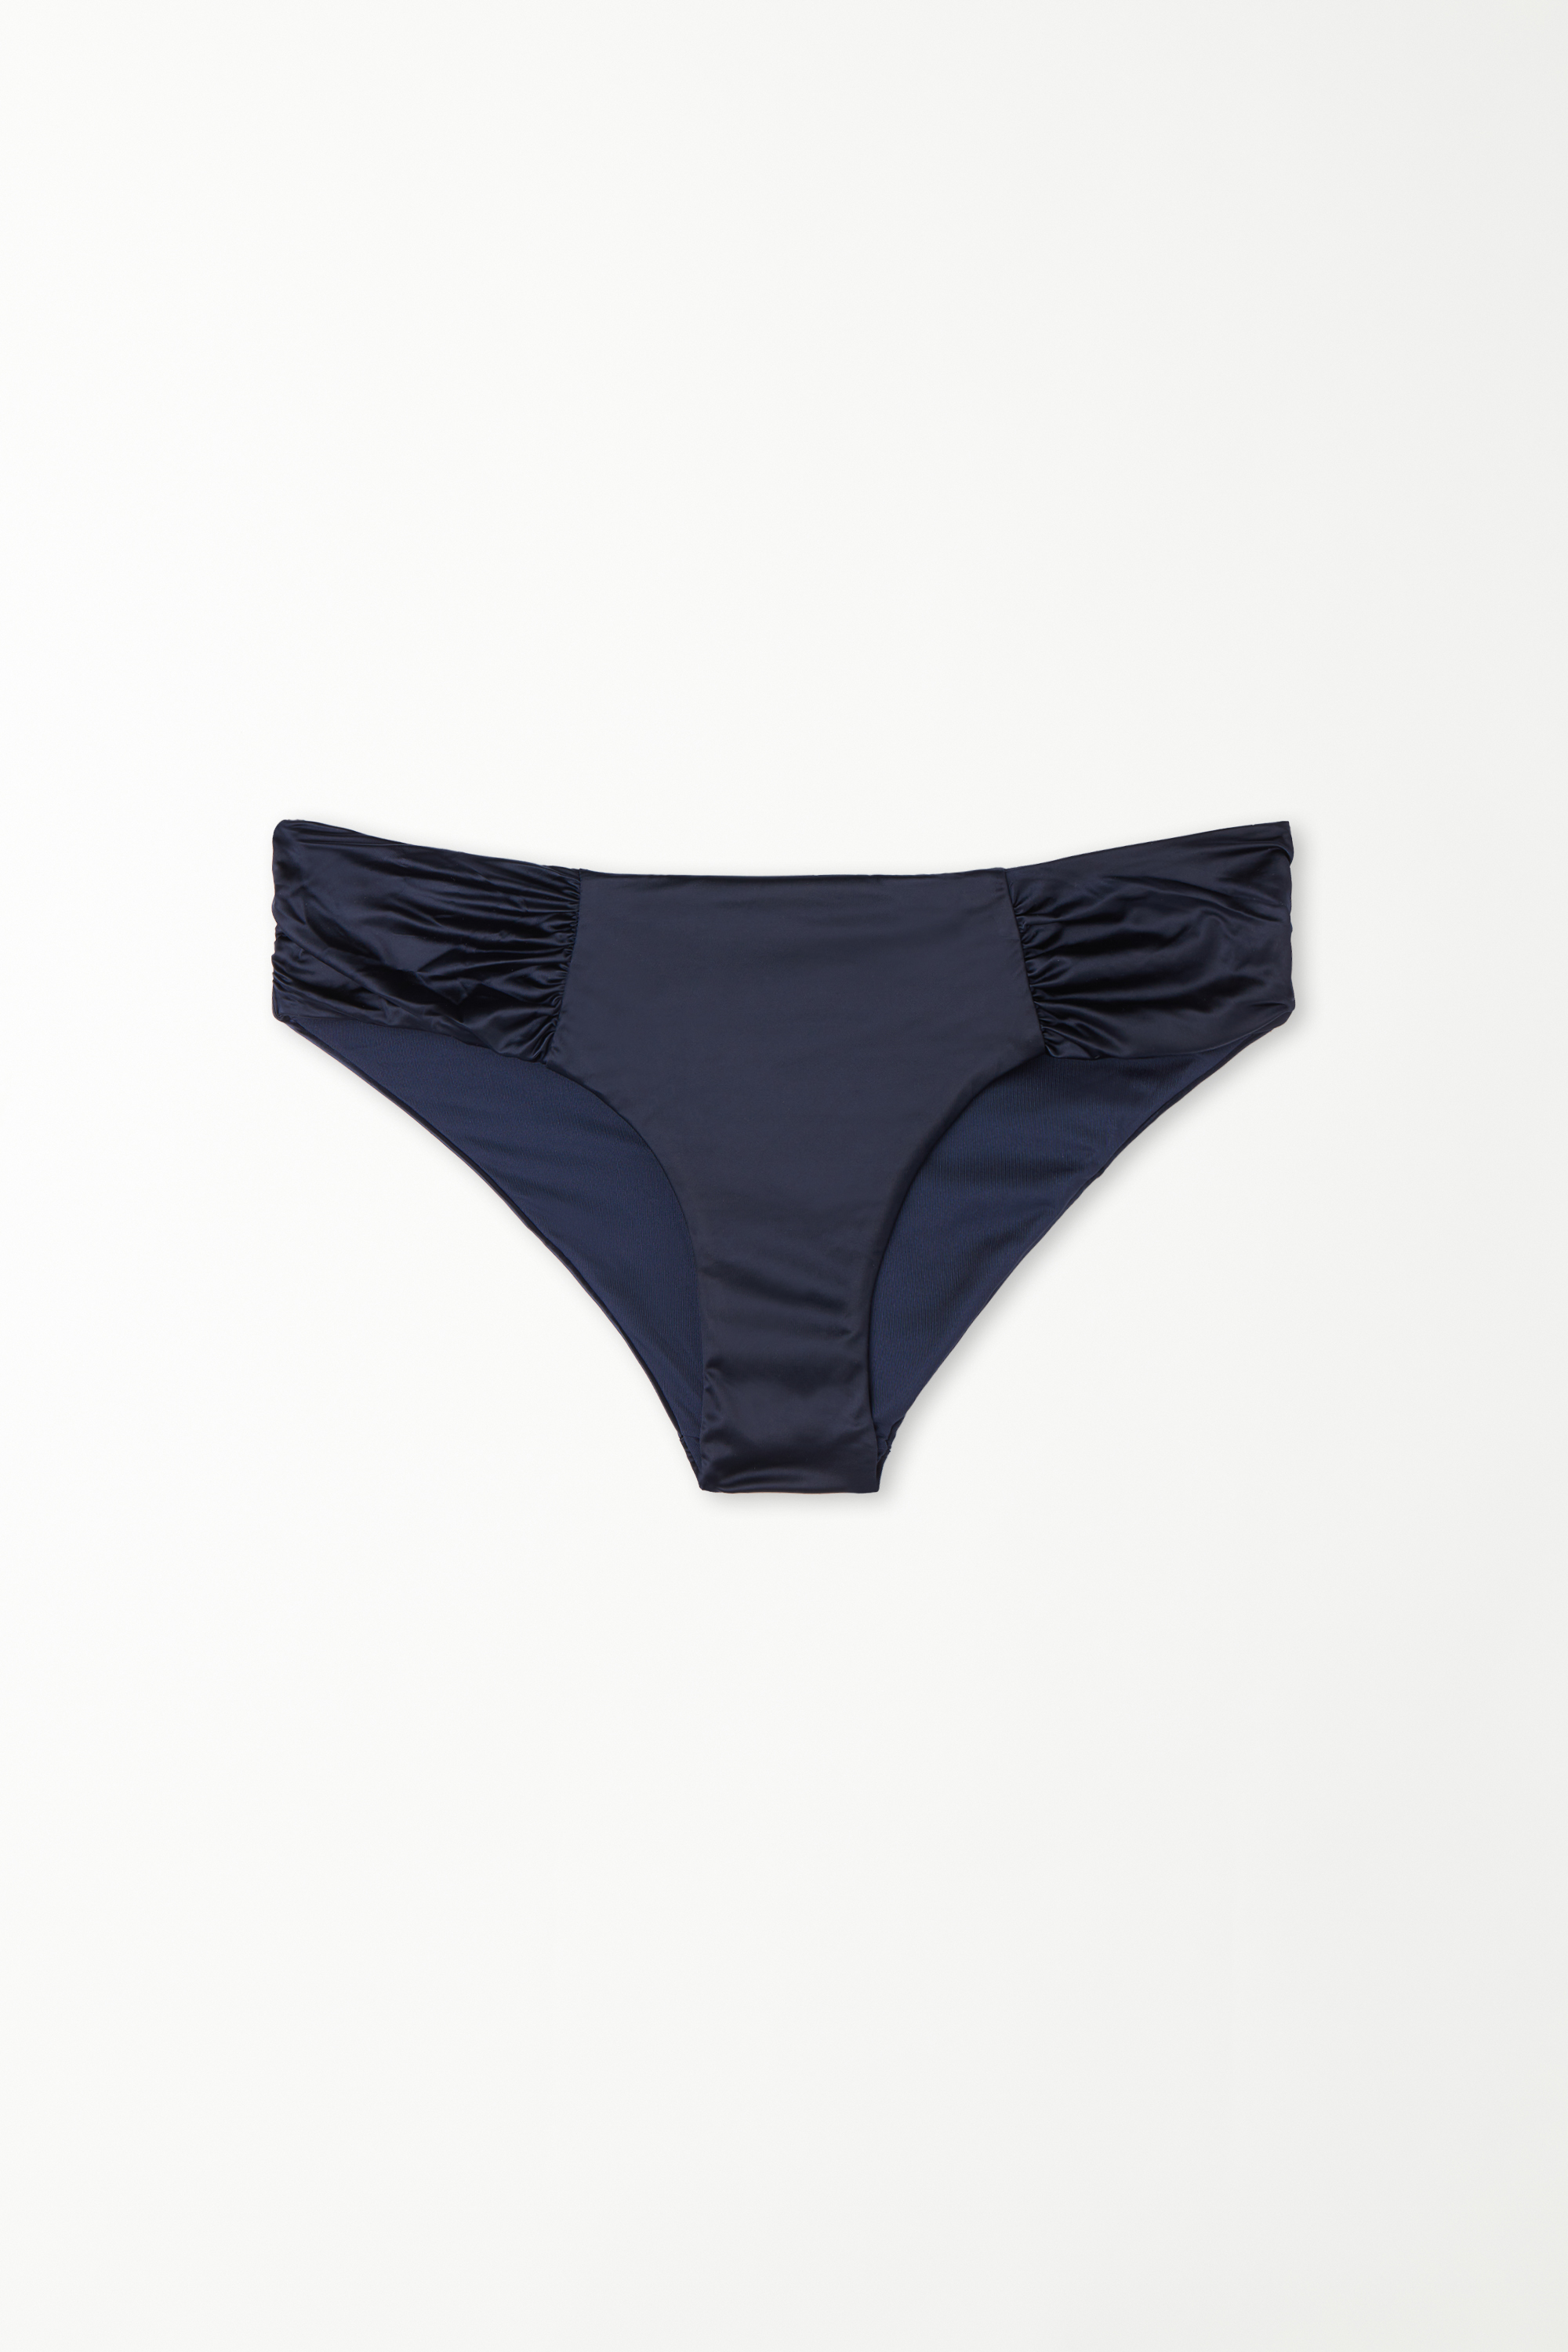 Shiny Navy Blue Gathered High-Cut Bikini Bottoms